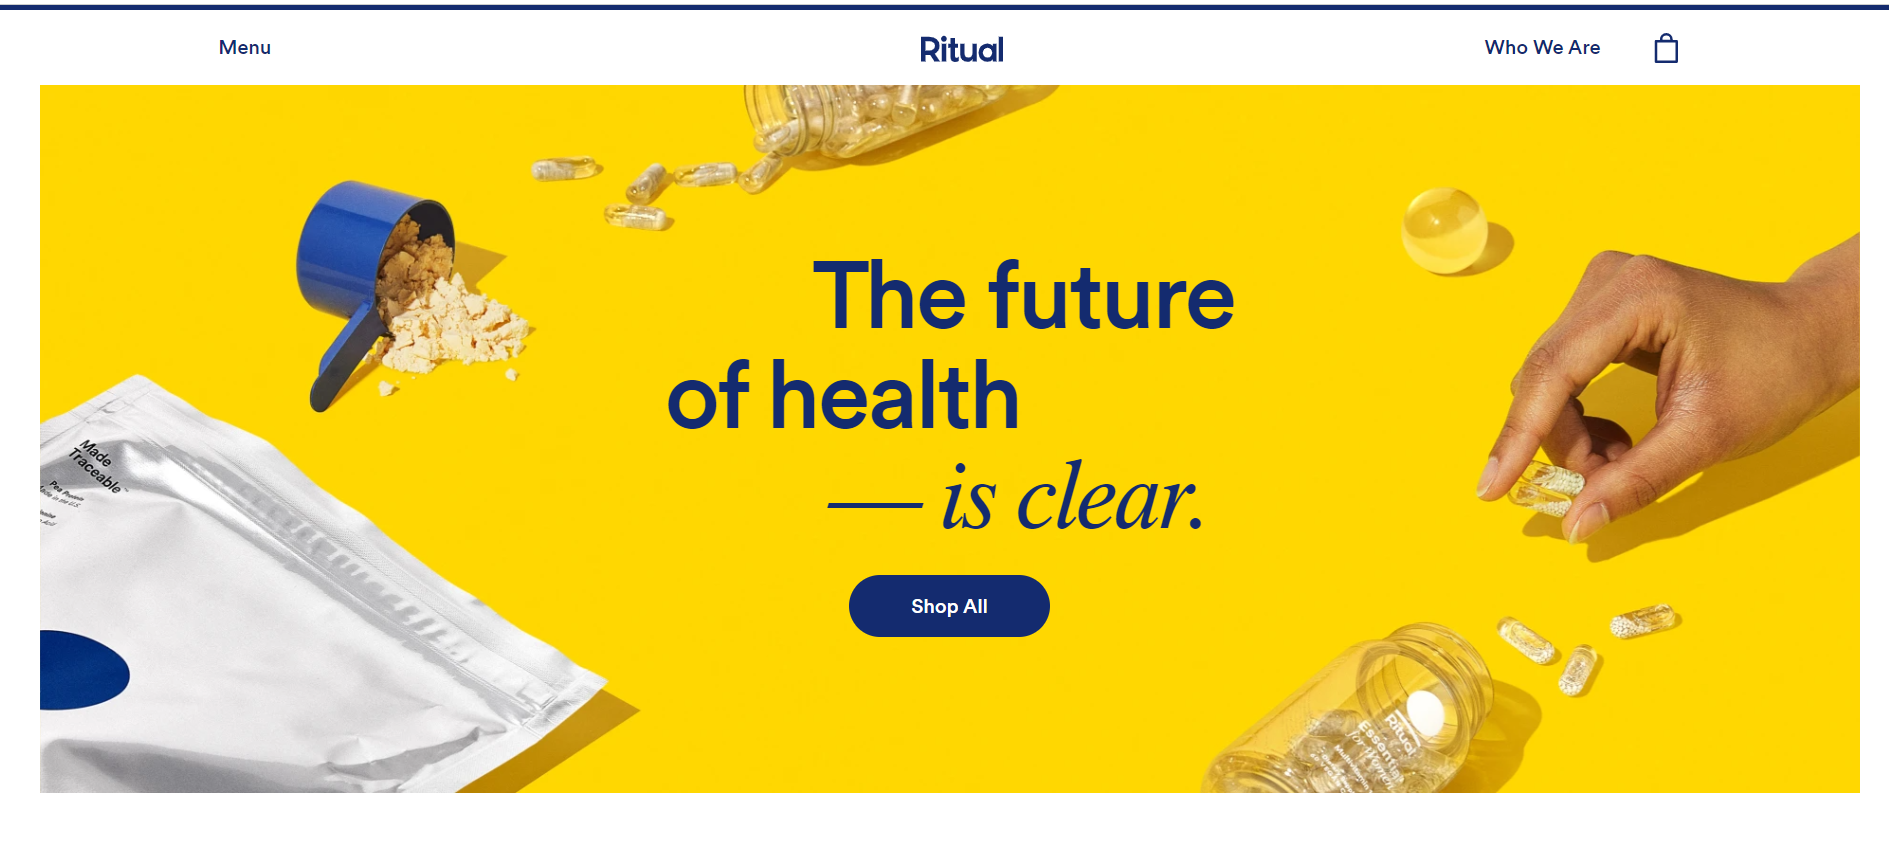 Official website of Ritual supplement brand